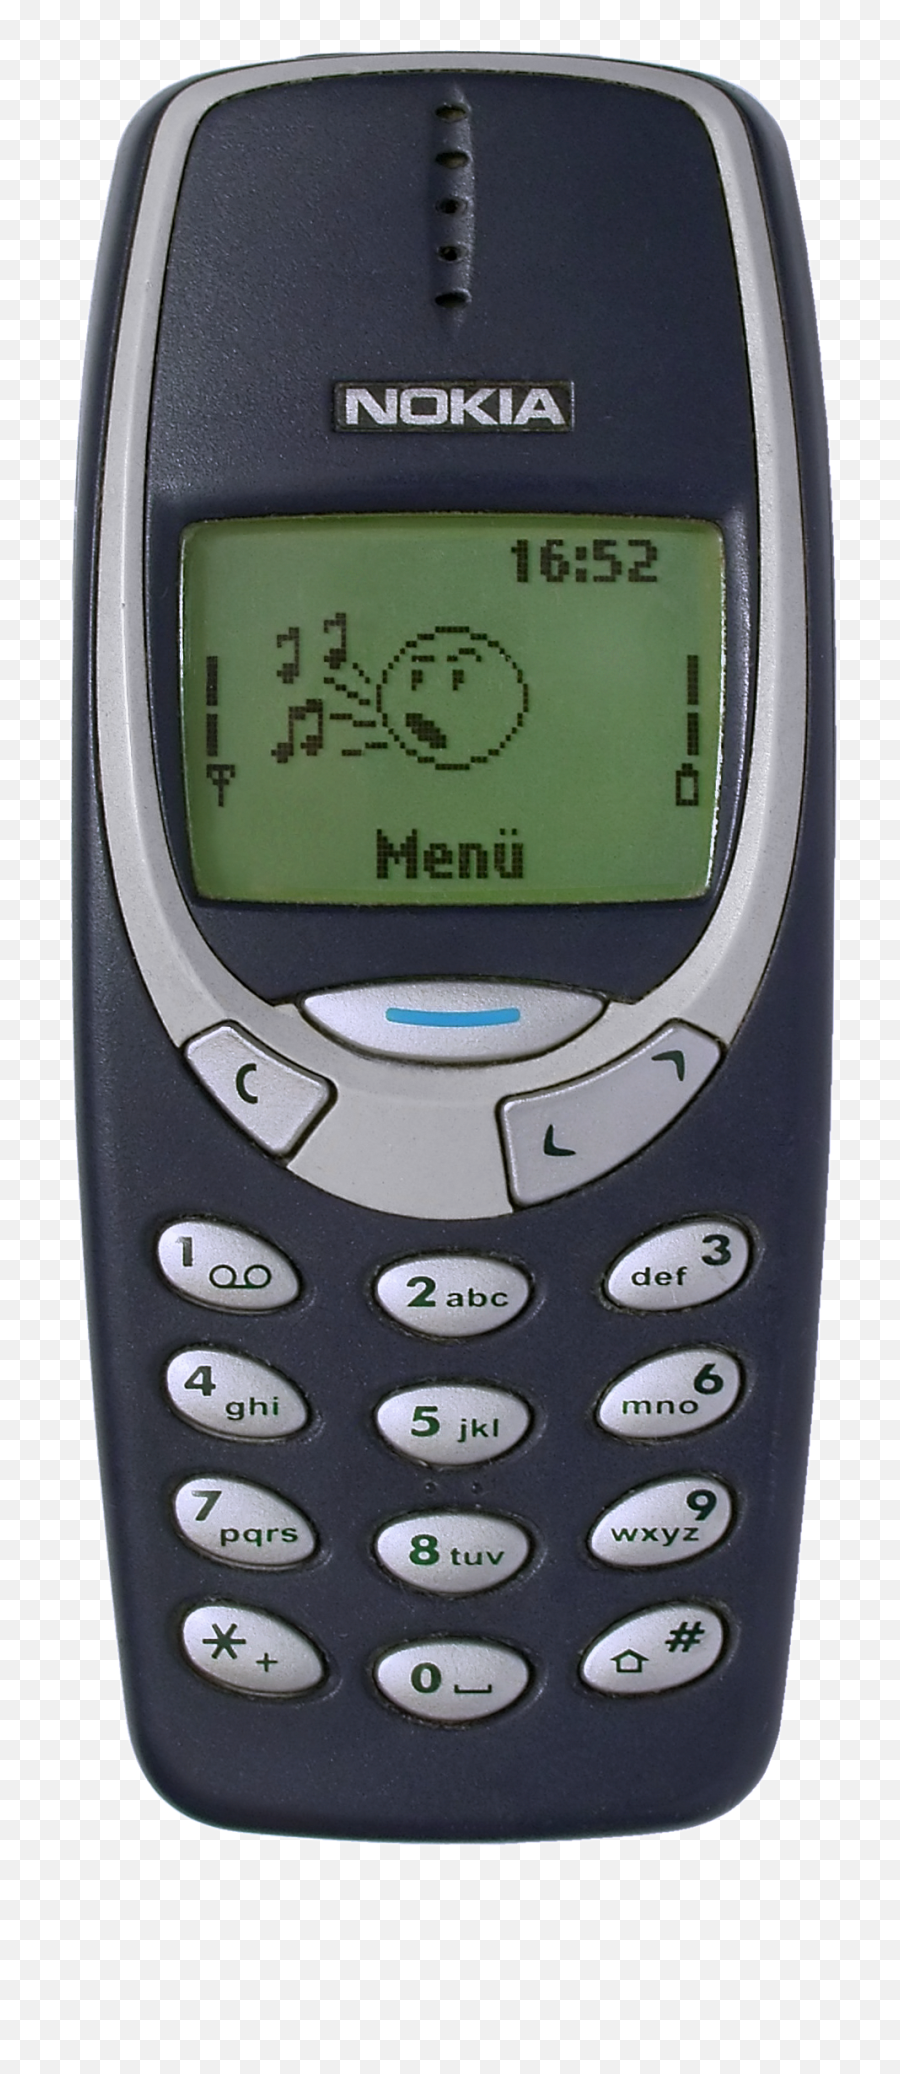 Nokia 3310 - Nokia 3310 Emoji,Nokia Flip Phone Emojis